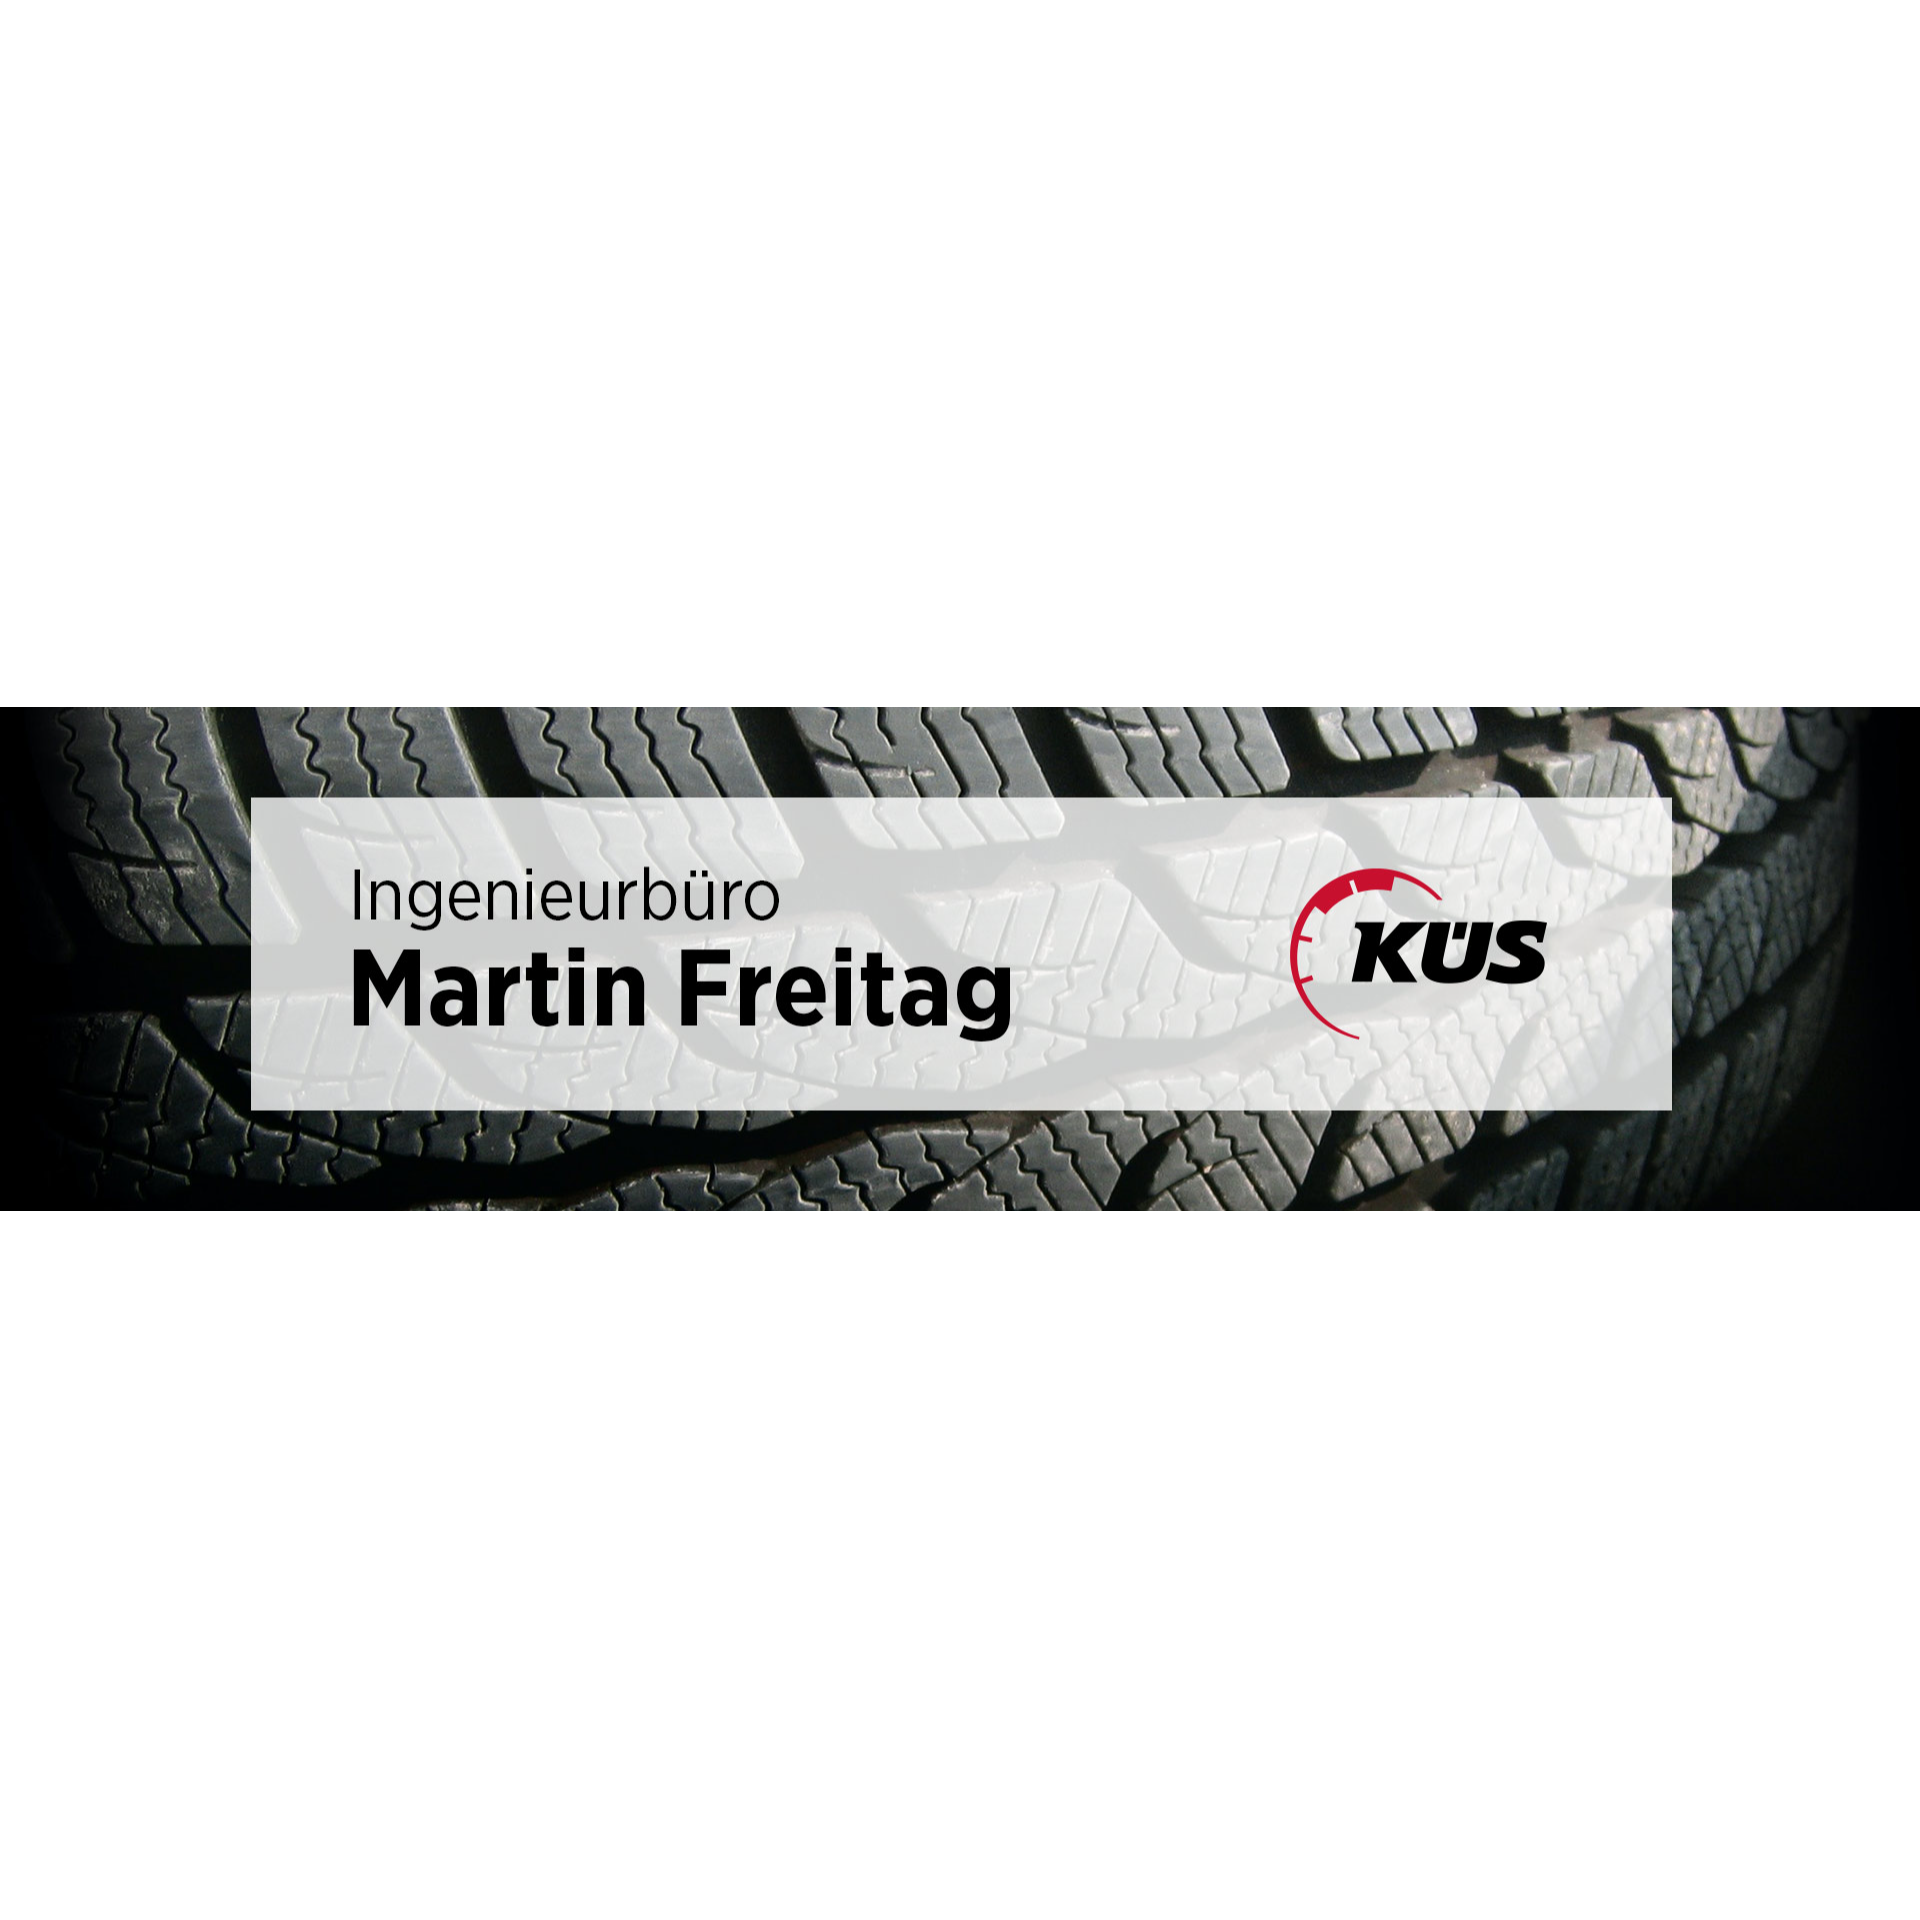 Ingenieurbüro Martin Freitag in Leverkusen